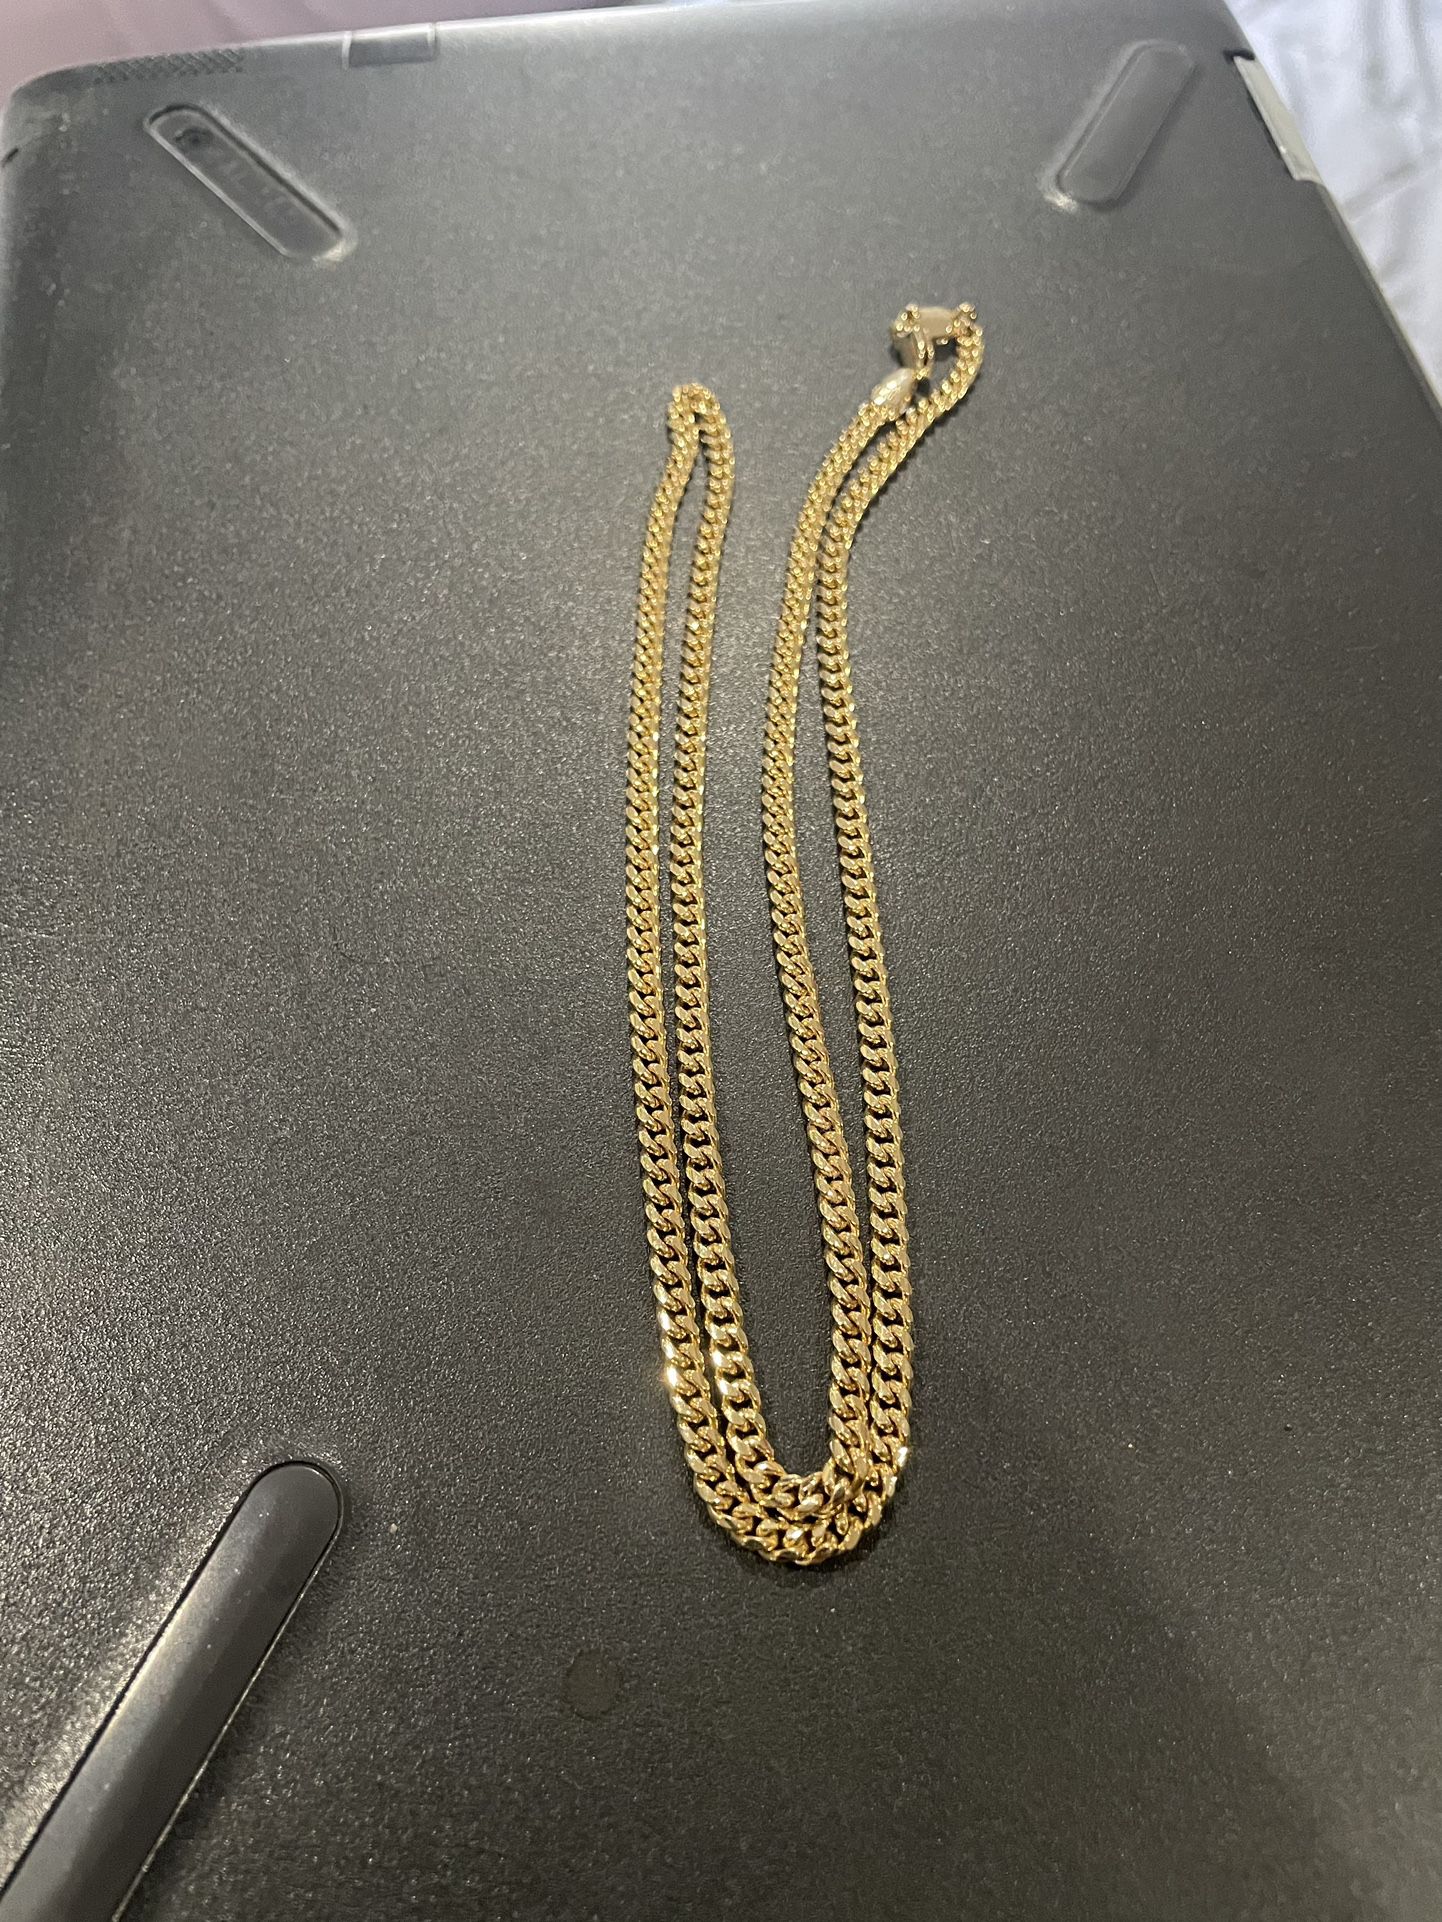 14k Italian Gold Chain